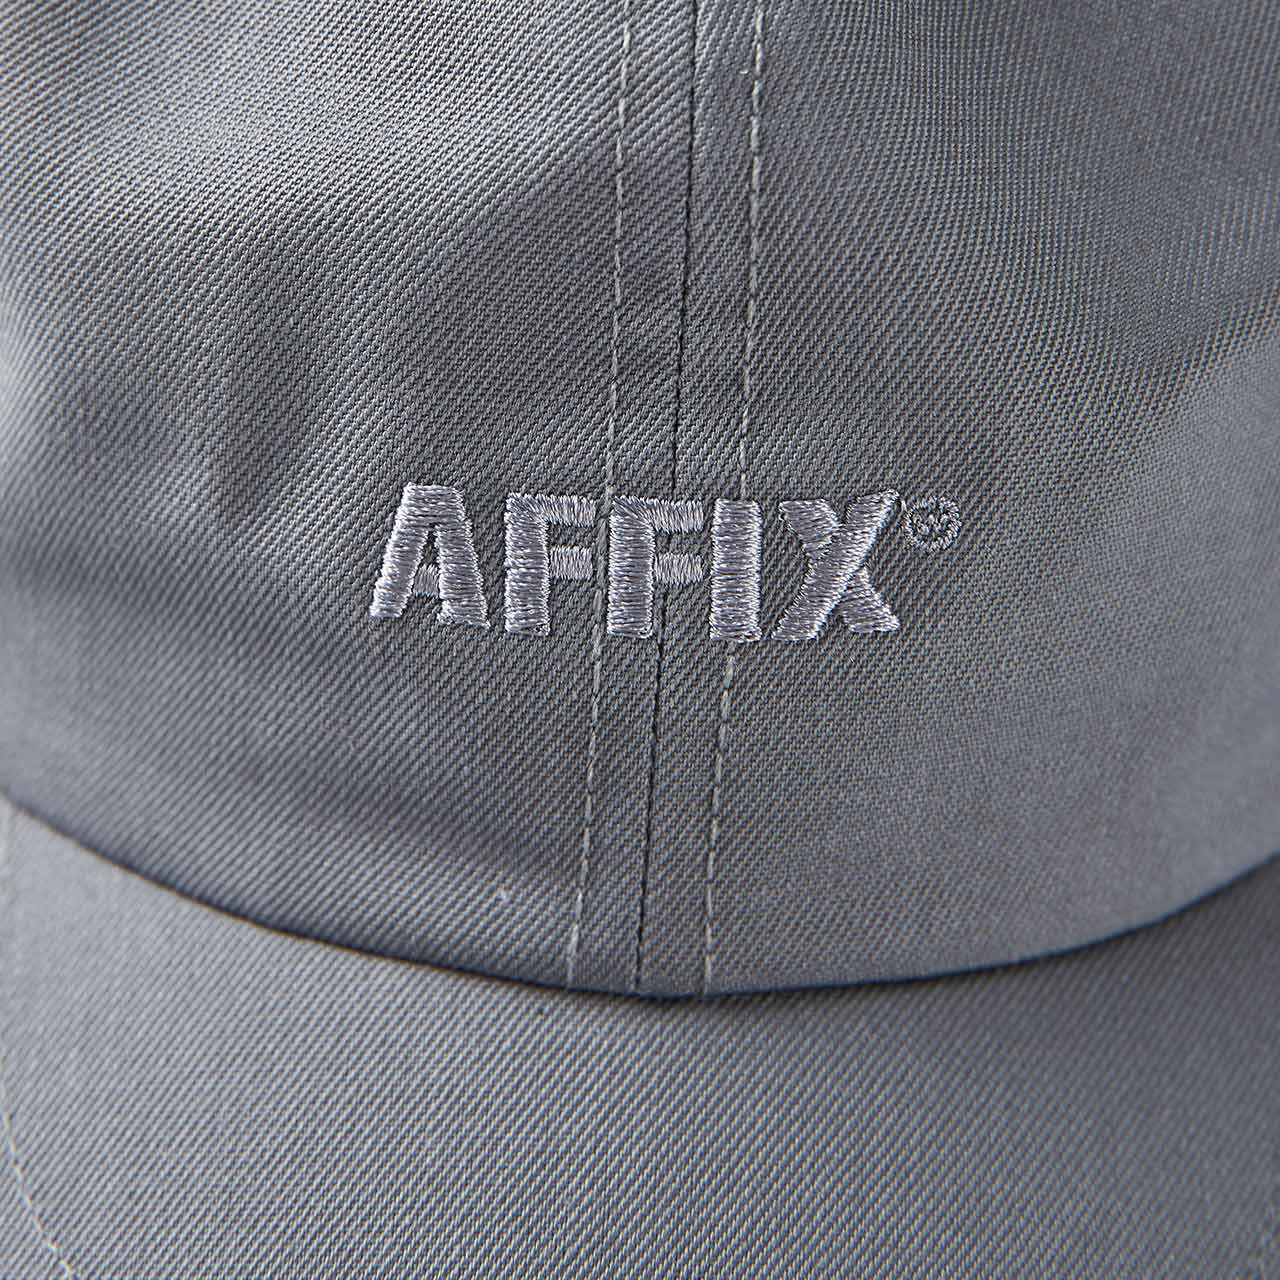 affix works affix works standard logo cap (grey) SS21AC11SPONESIZE